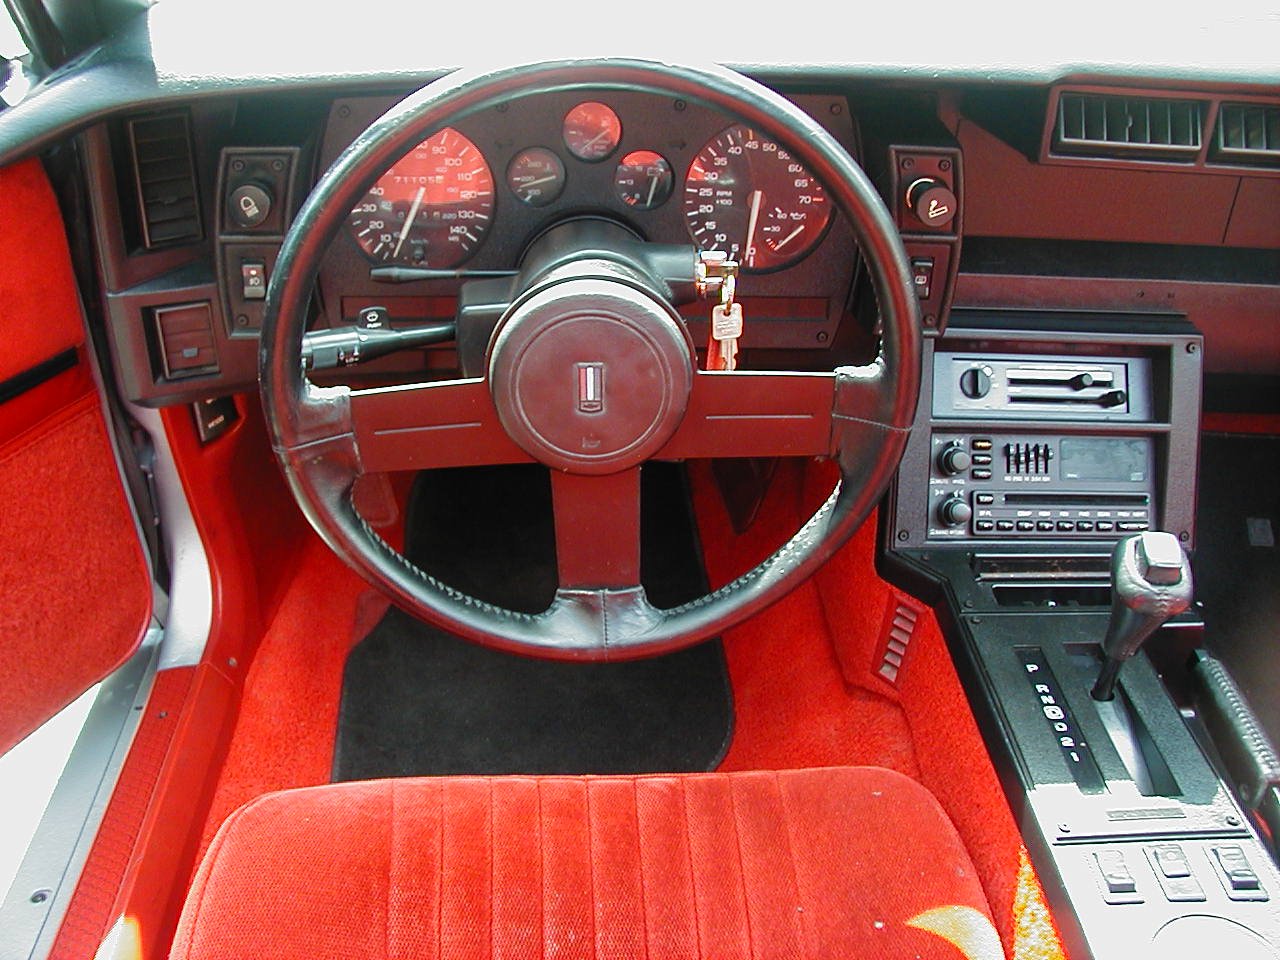 1986 camaro interior doors skins